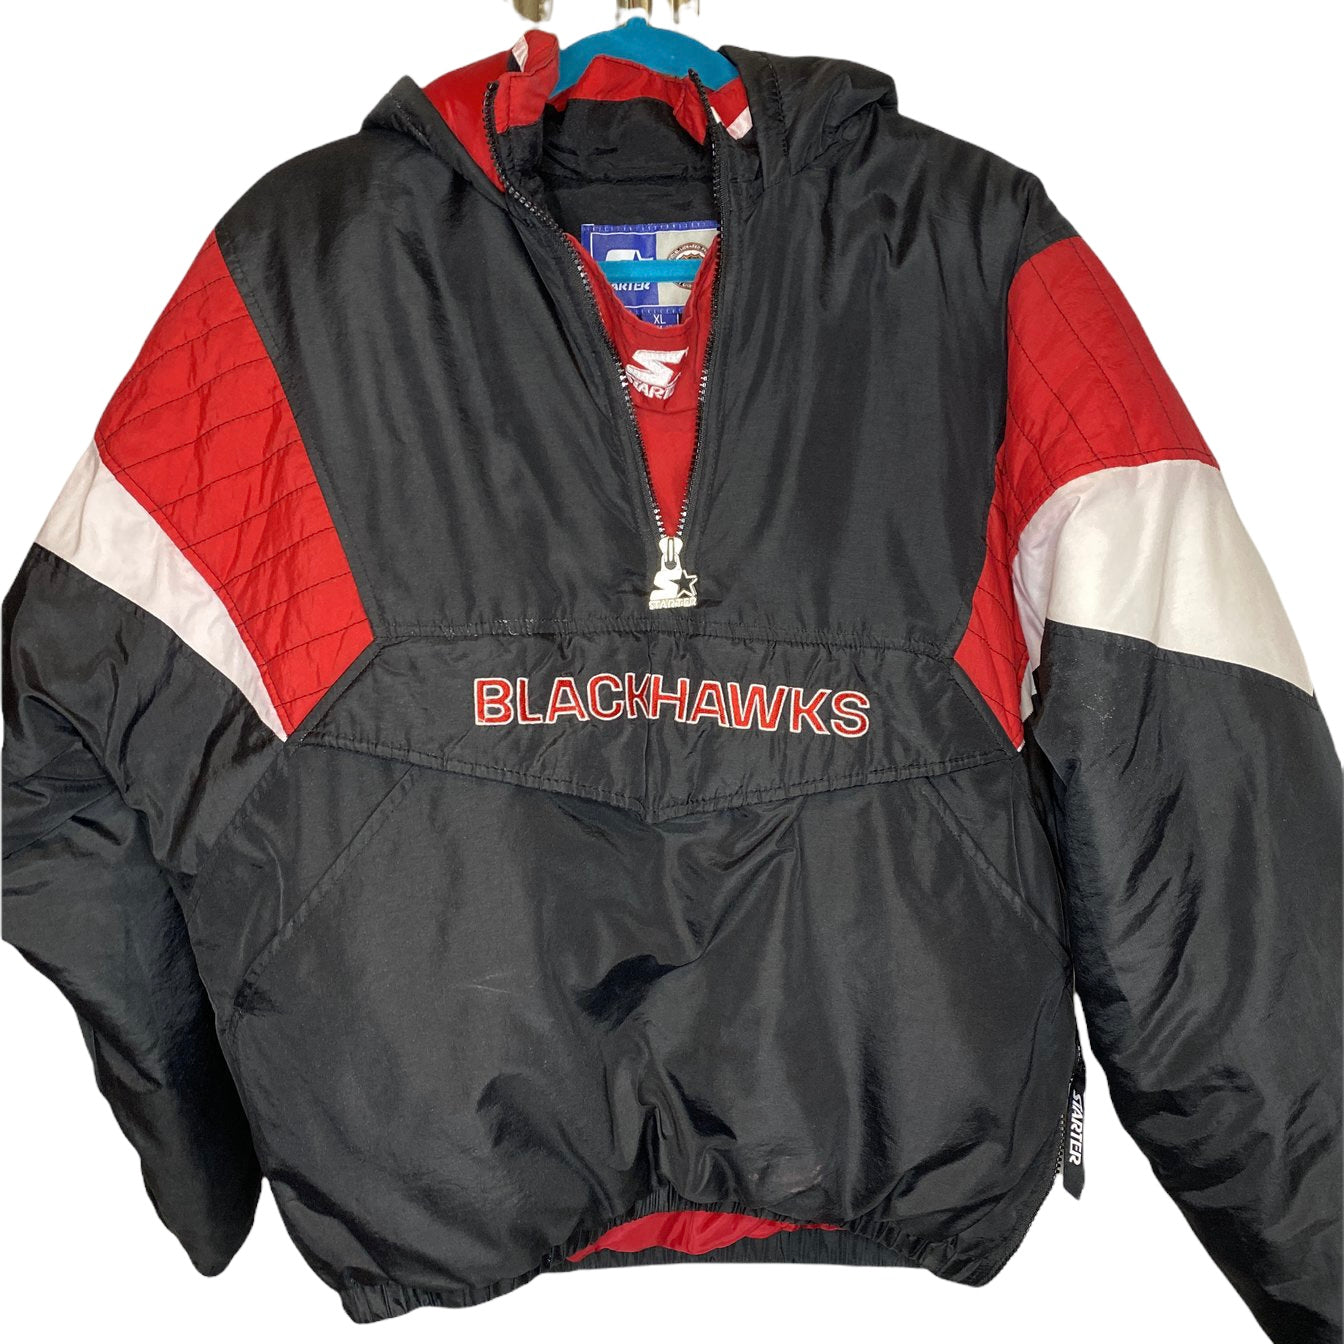 BlackHawks Starter Jacket, Stains and